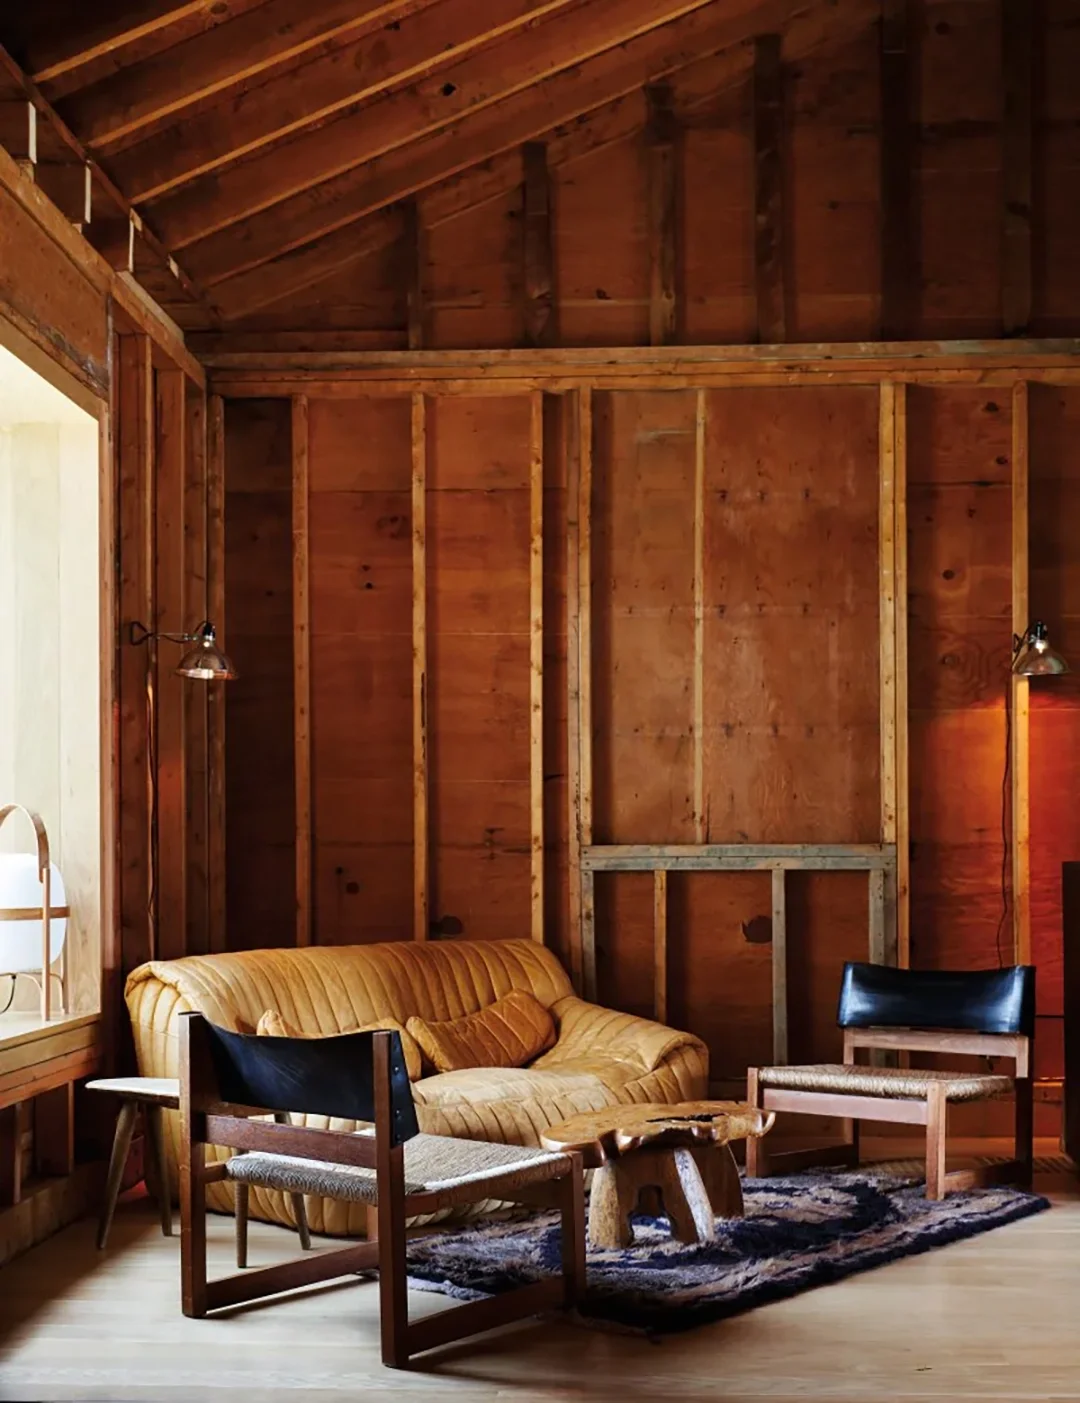 light leather sofa in corner of cabin